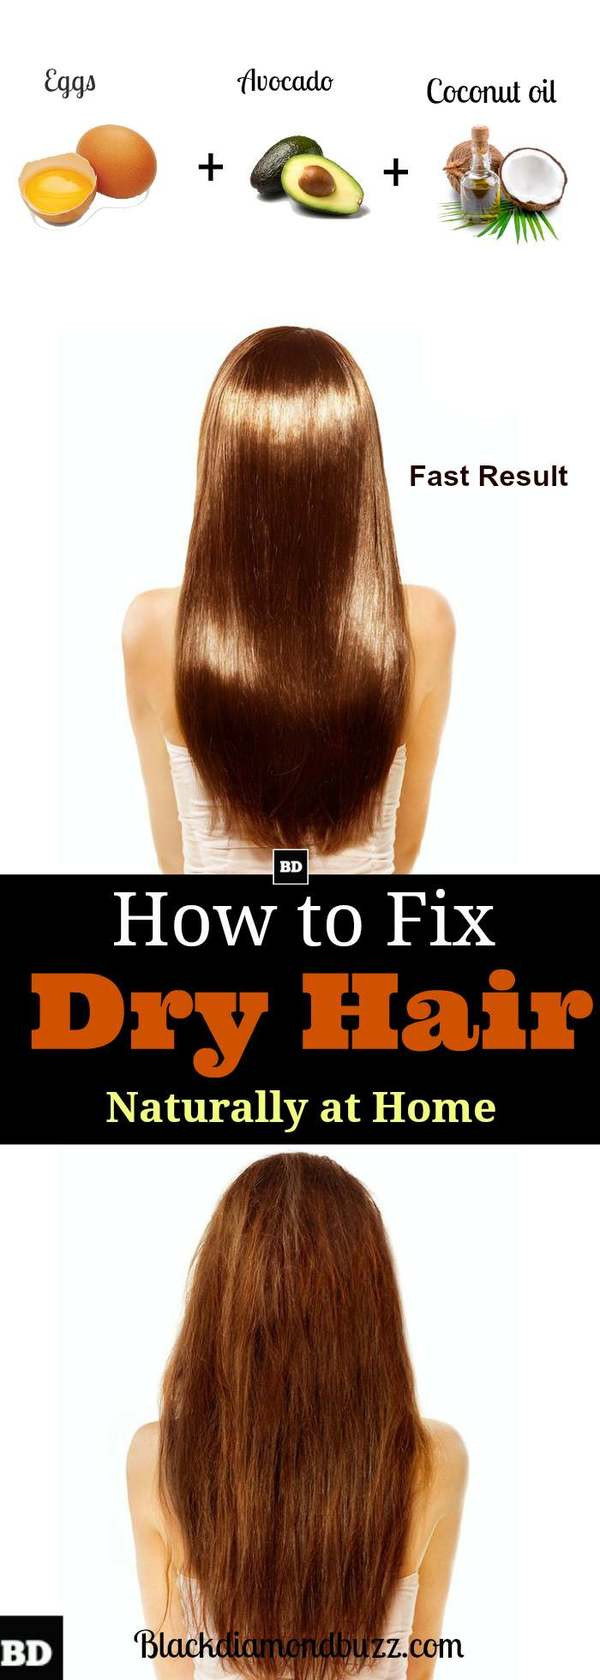 Dry Hair Treatment DIY
 DIY Home Reme s for Dry Hair Overnight Dry Hair Treatments